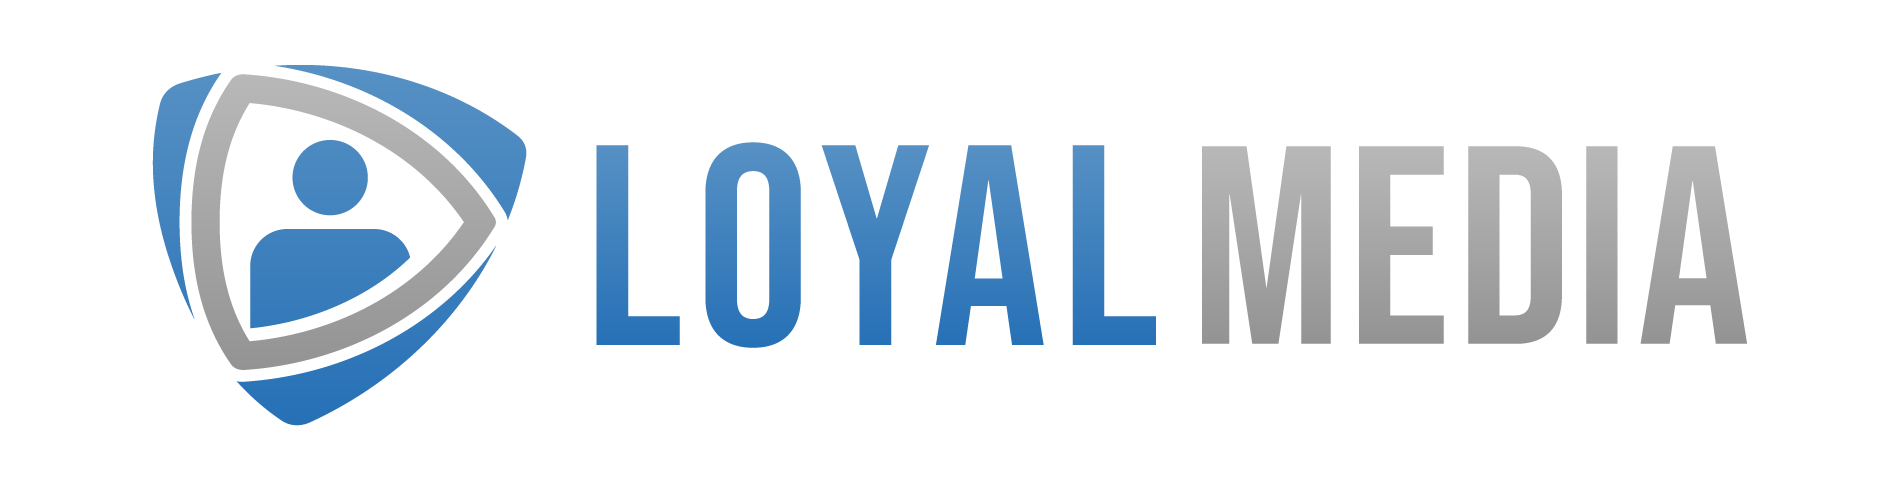 Loyal Media Logo by Florian Pelzer